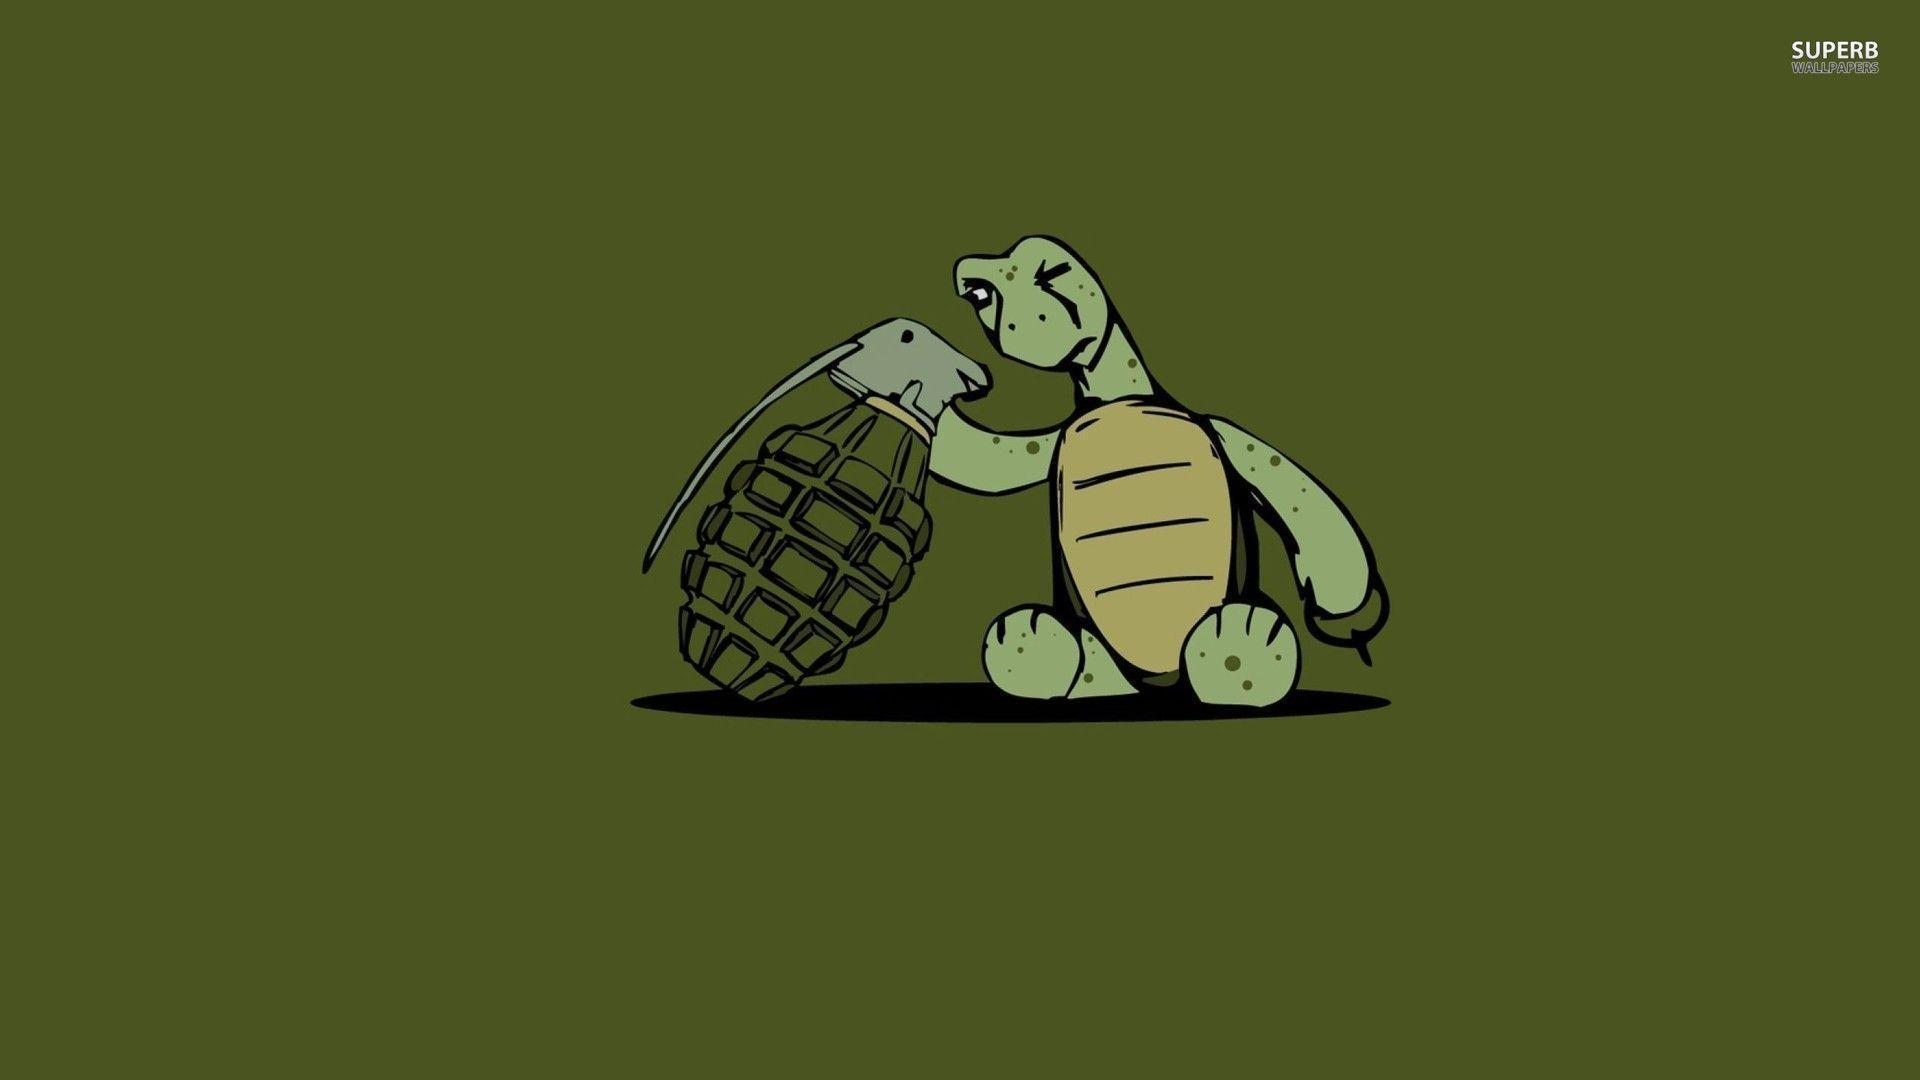 Turtle looking at a grenade wallpaper wallpaper - #